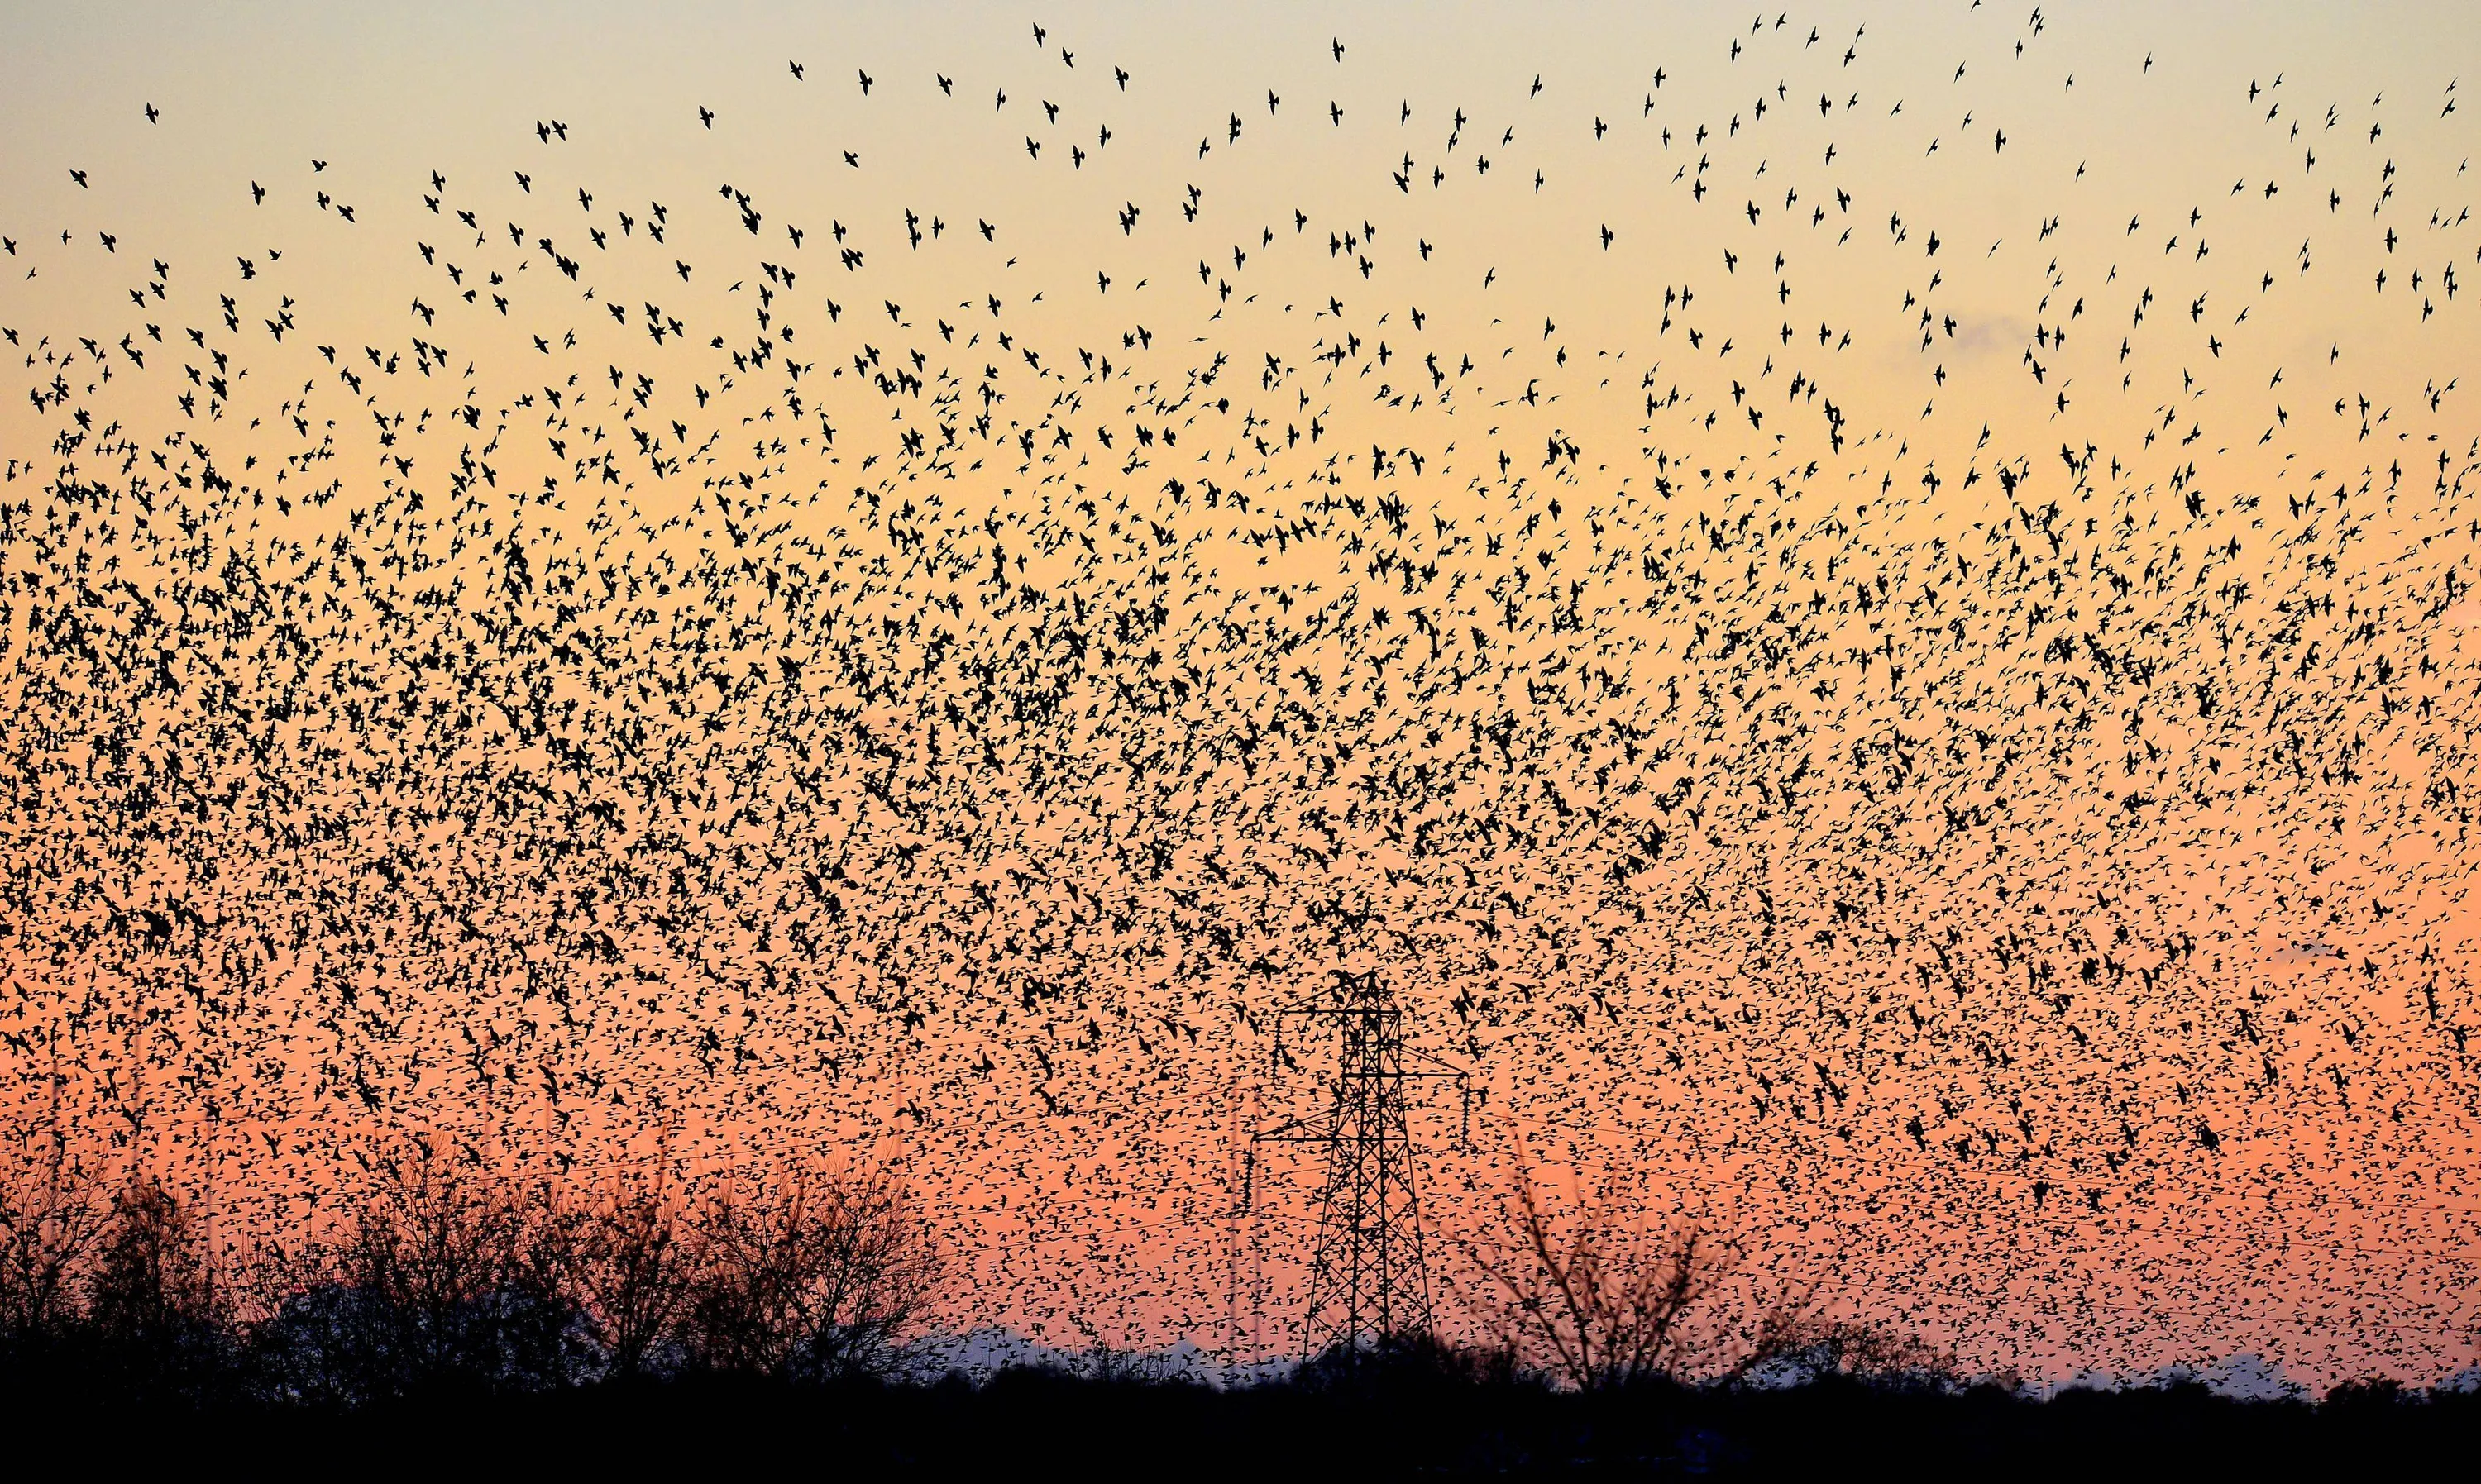 Песня тысячи птиц надо мною. Миграция Скворцов. Много птиц. Стая птиц в небе. Стая Скворцов.